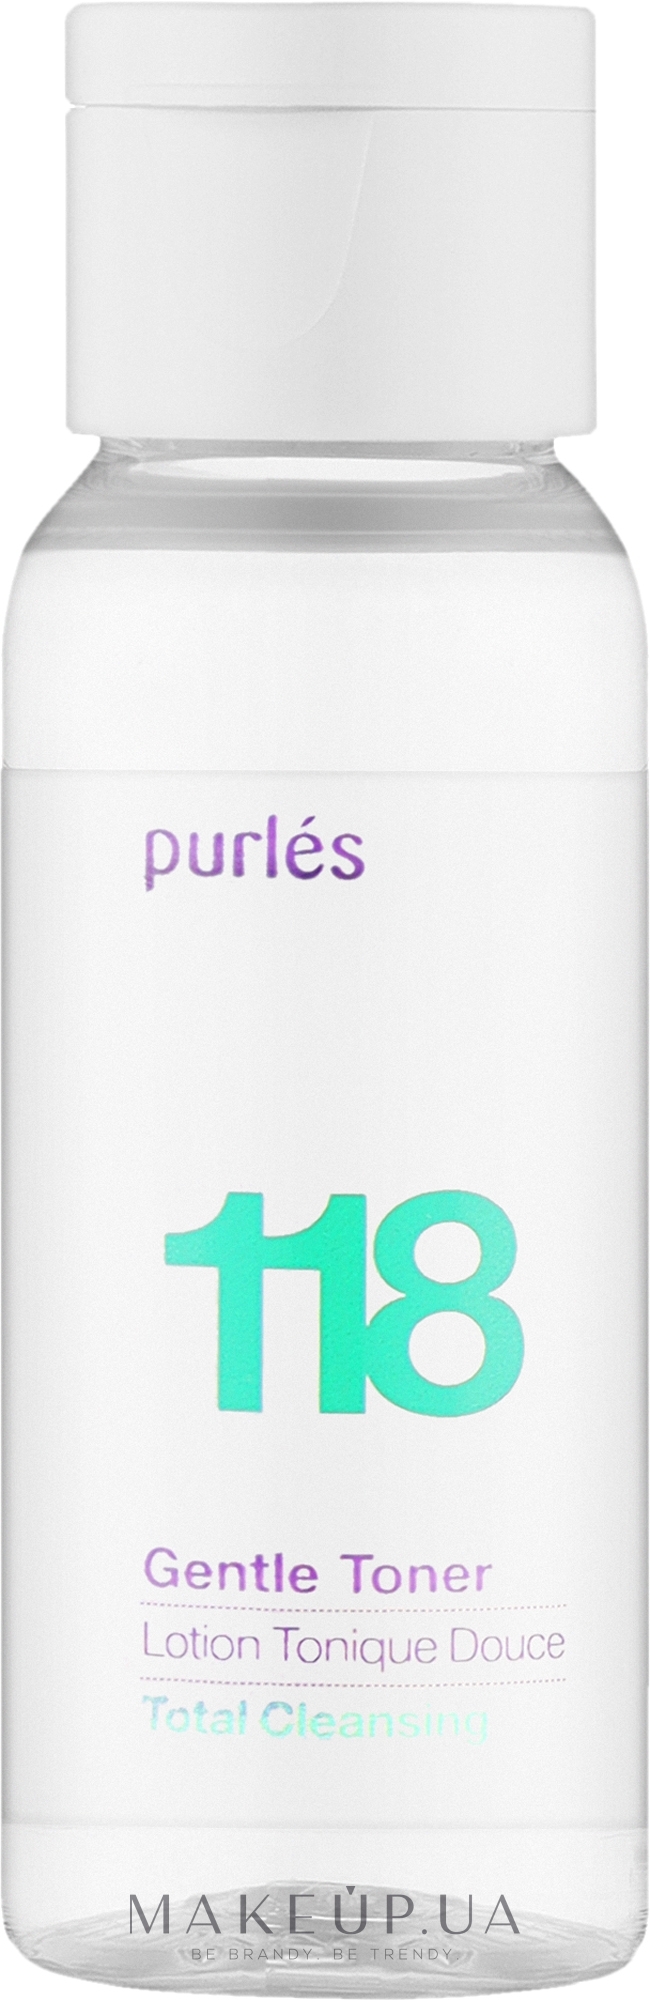 Ніжний тонік для обличчя - Purles Total Cleansing 118 Gentle Toner (міні) — фото 25ml